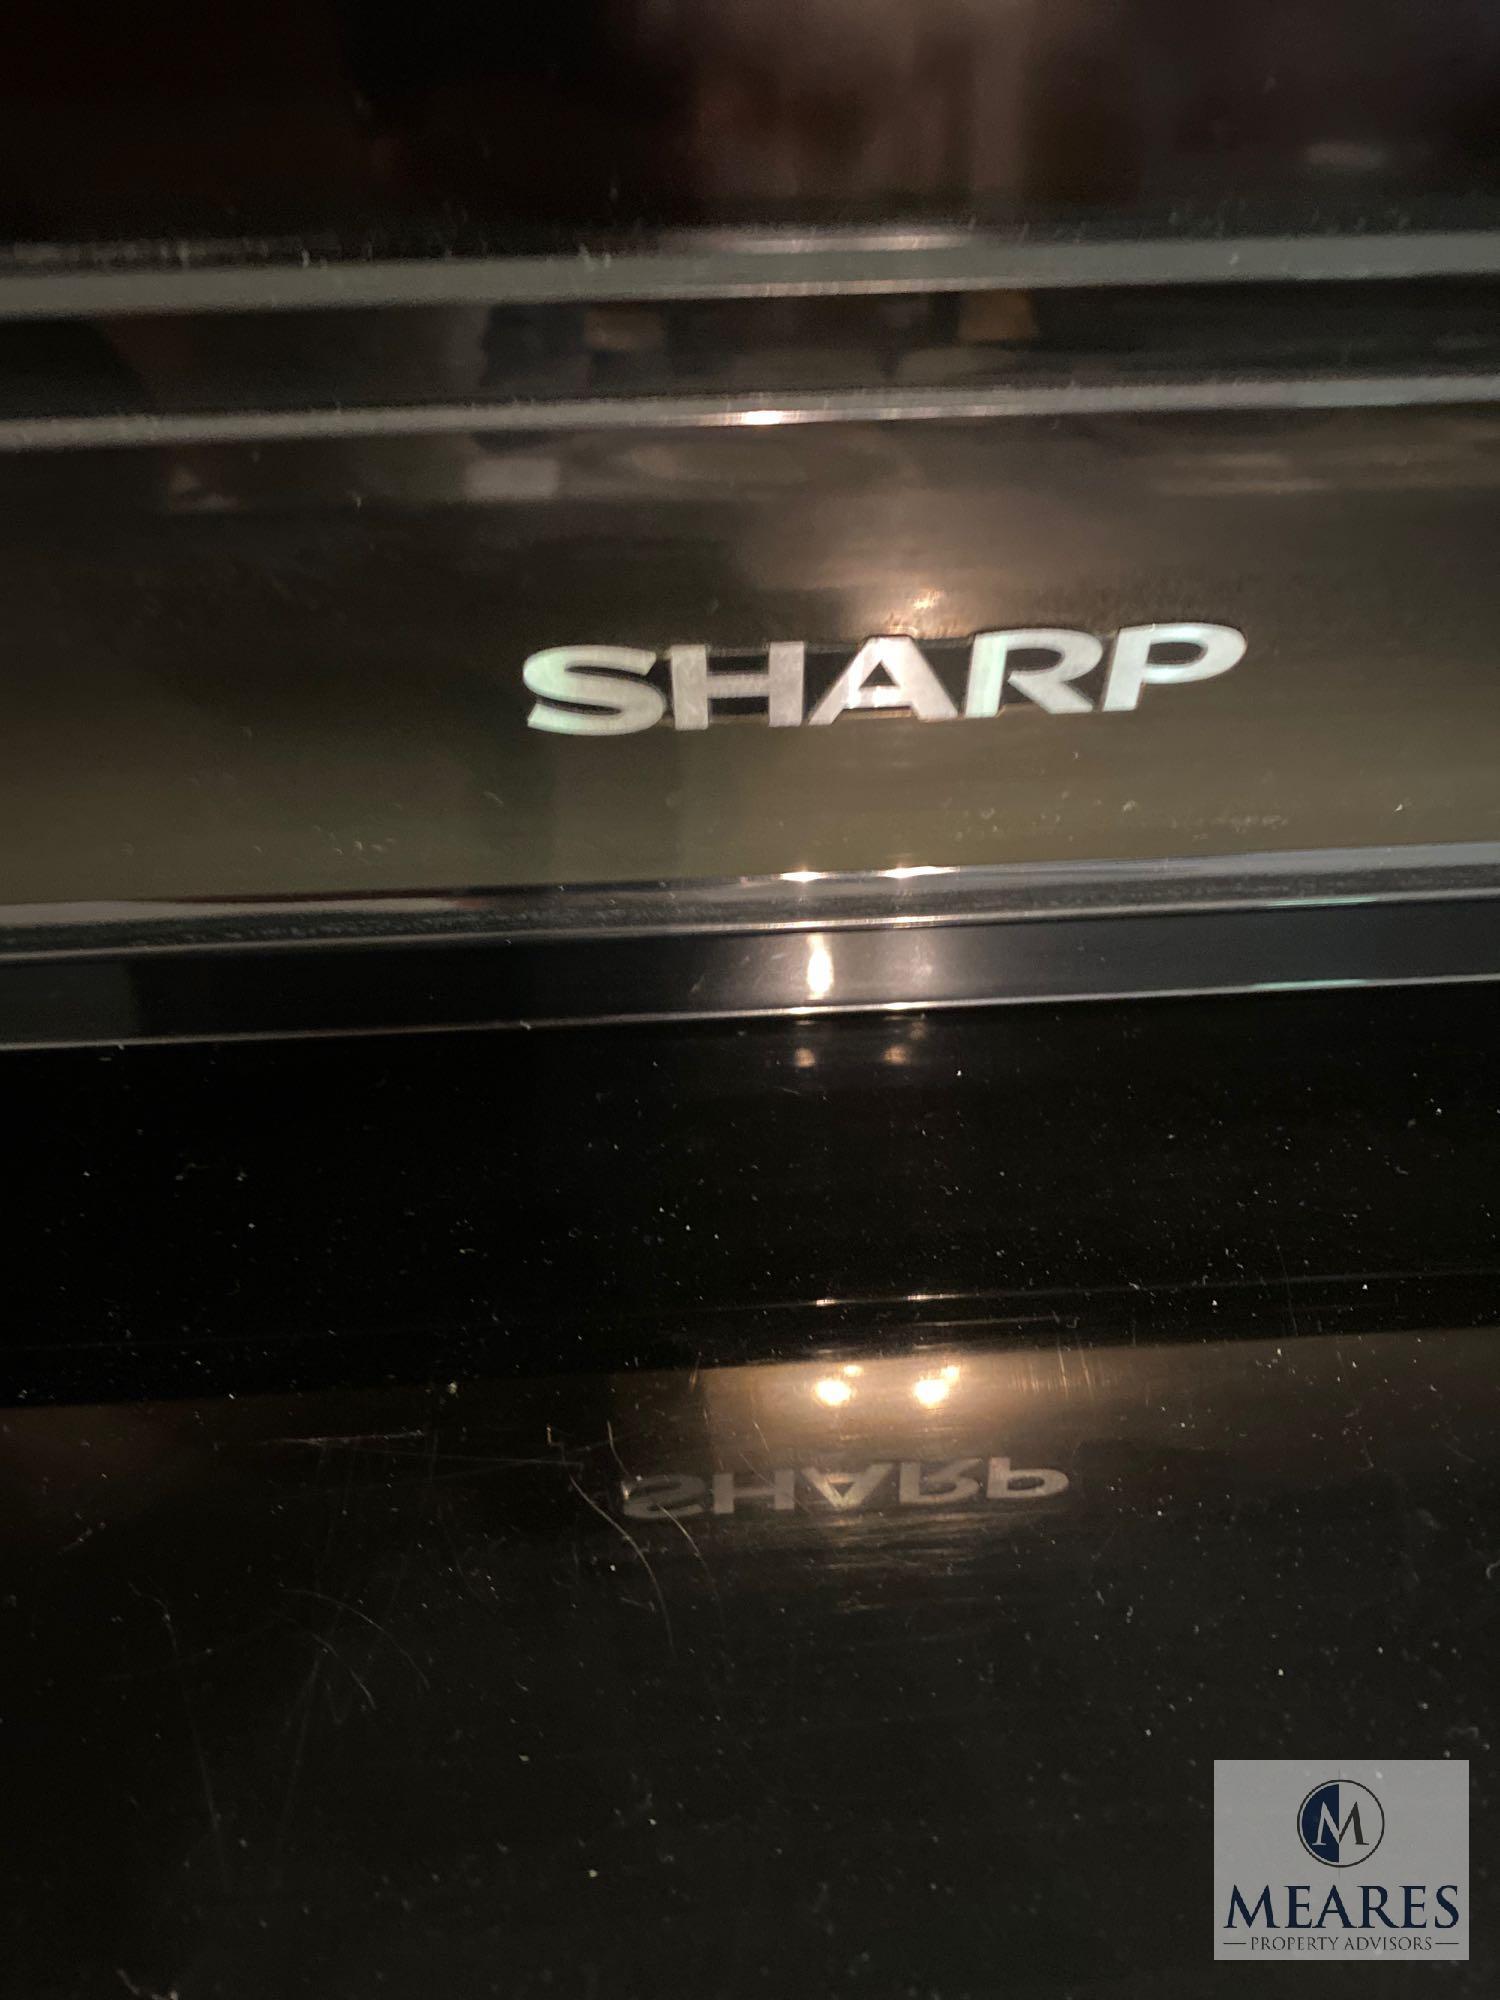 Sharp Aquos Liquid Crystal Television with remote